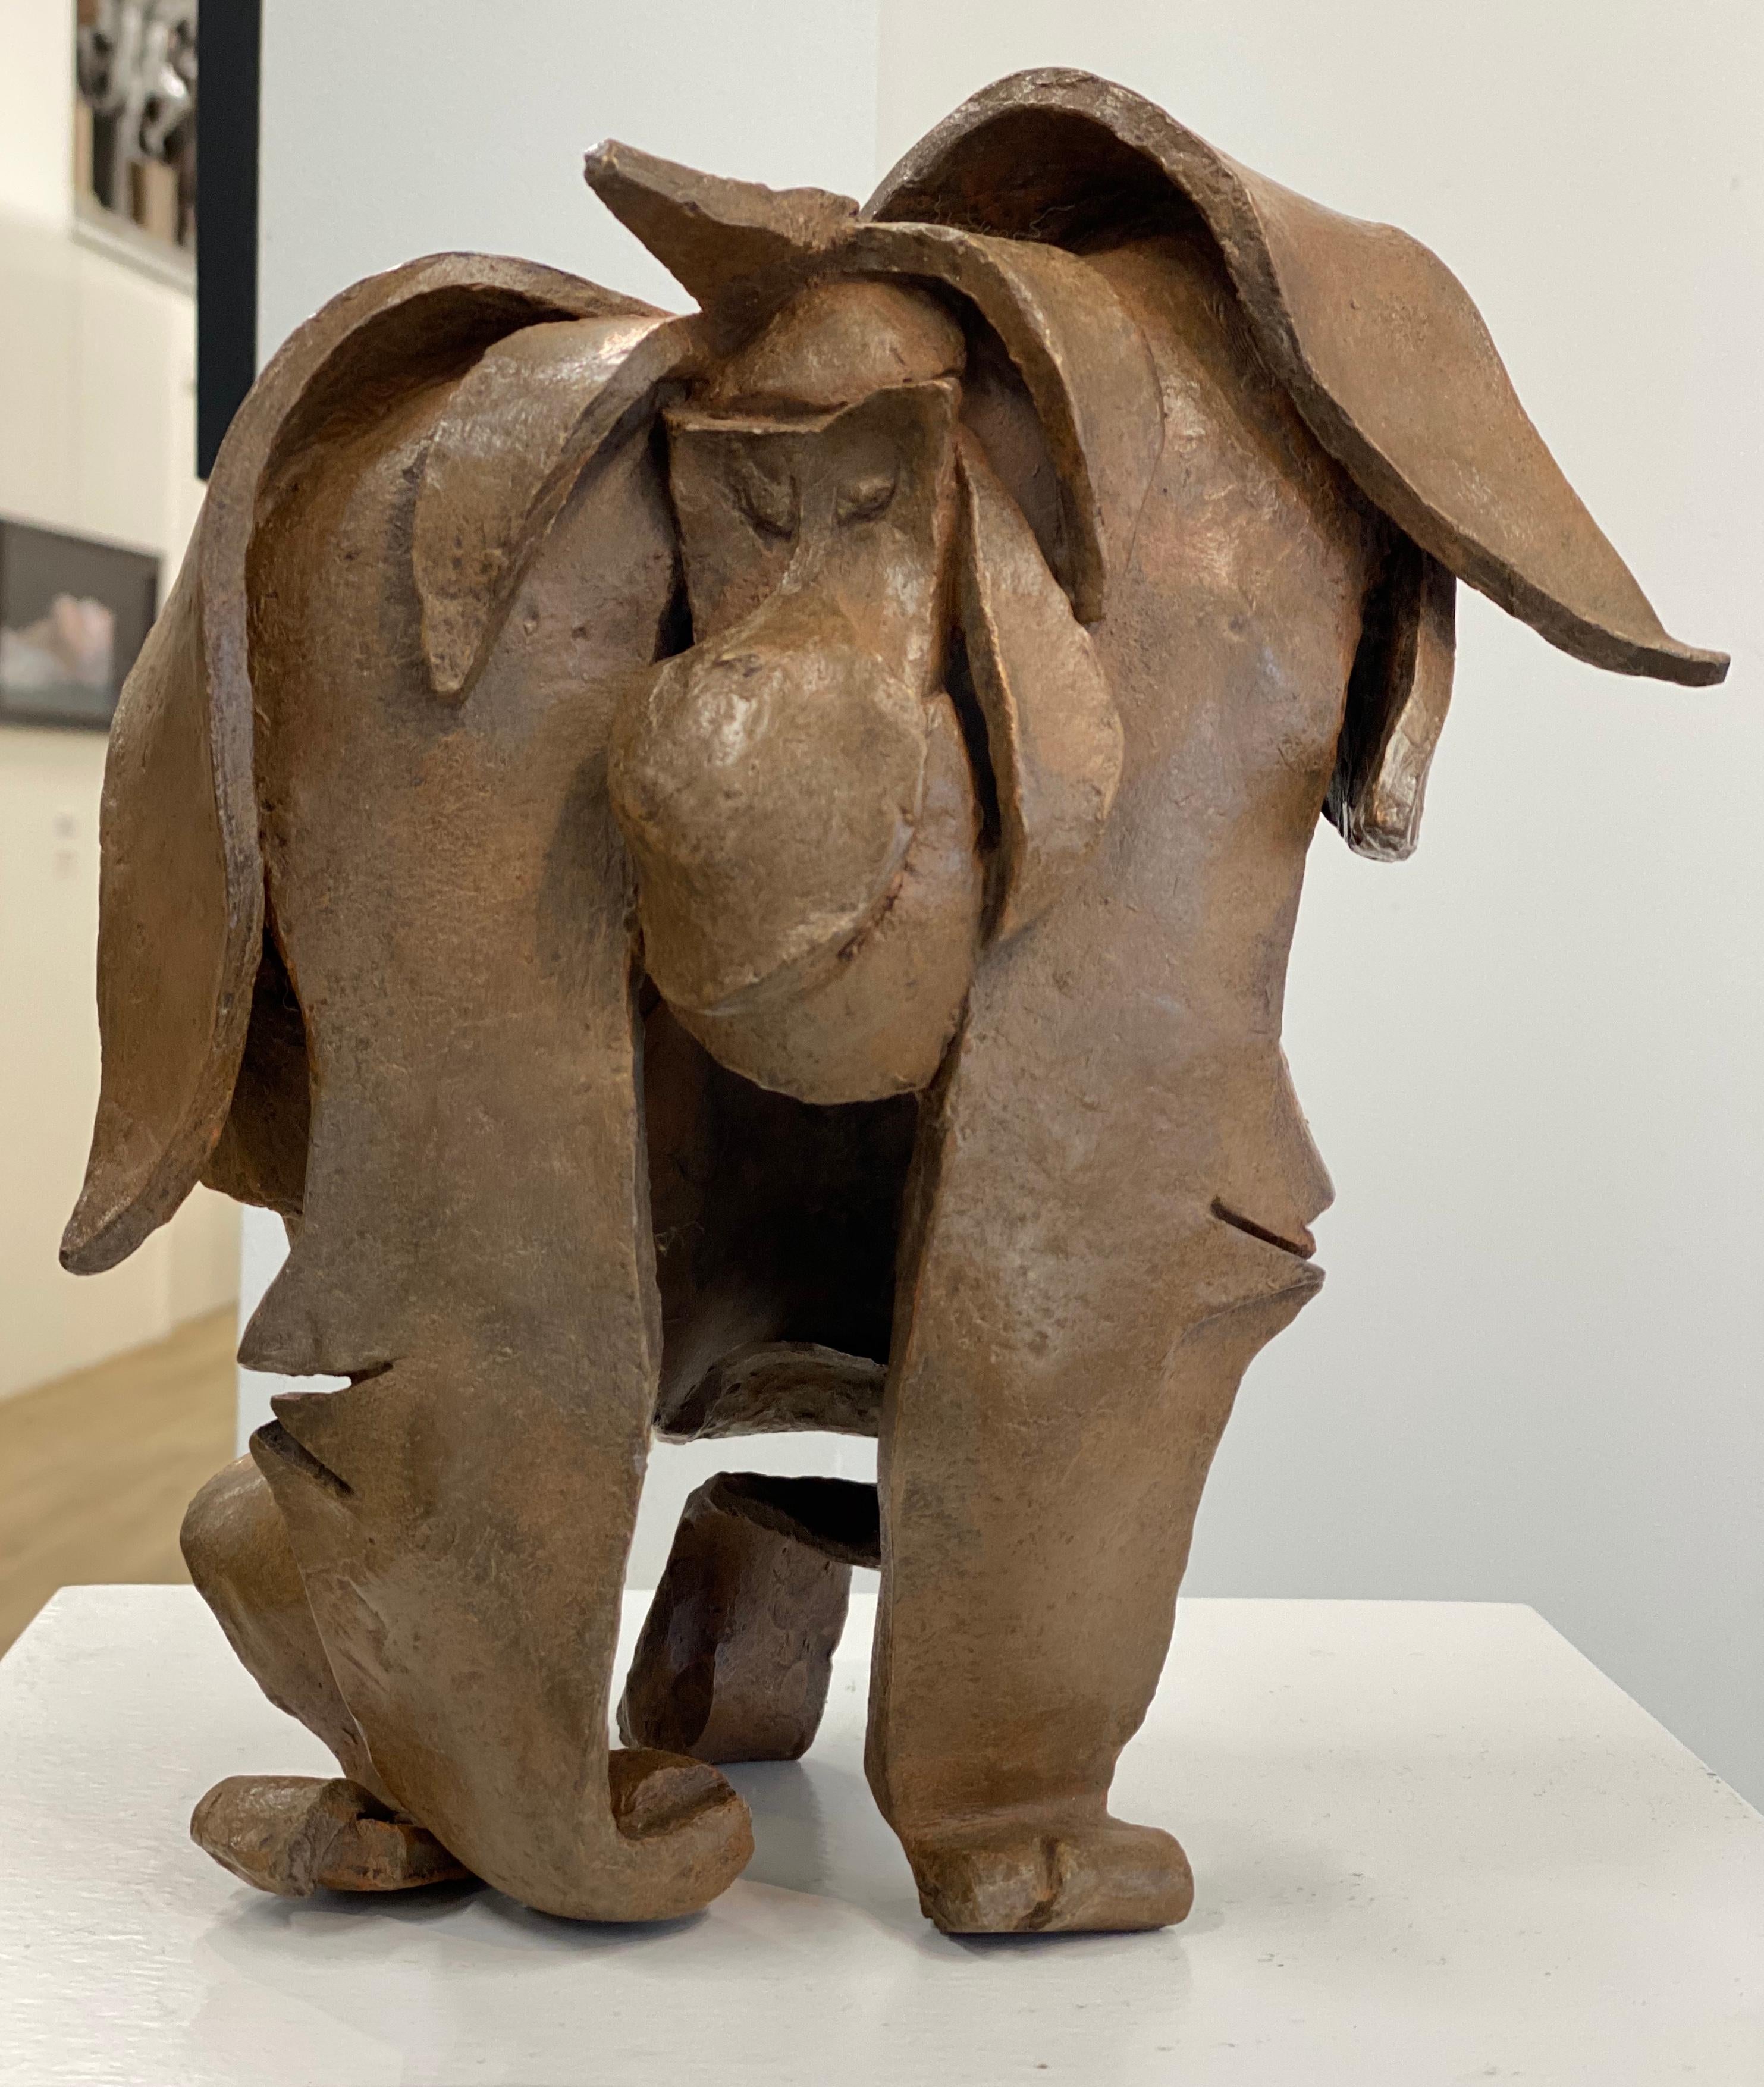 Forest Monkey- 21st Century bronze sculpture of an animal